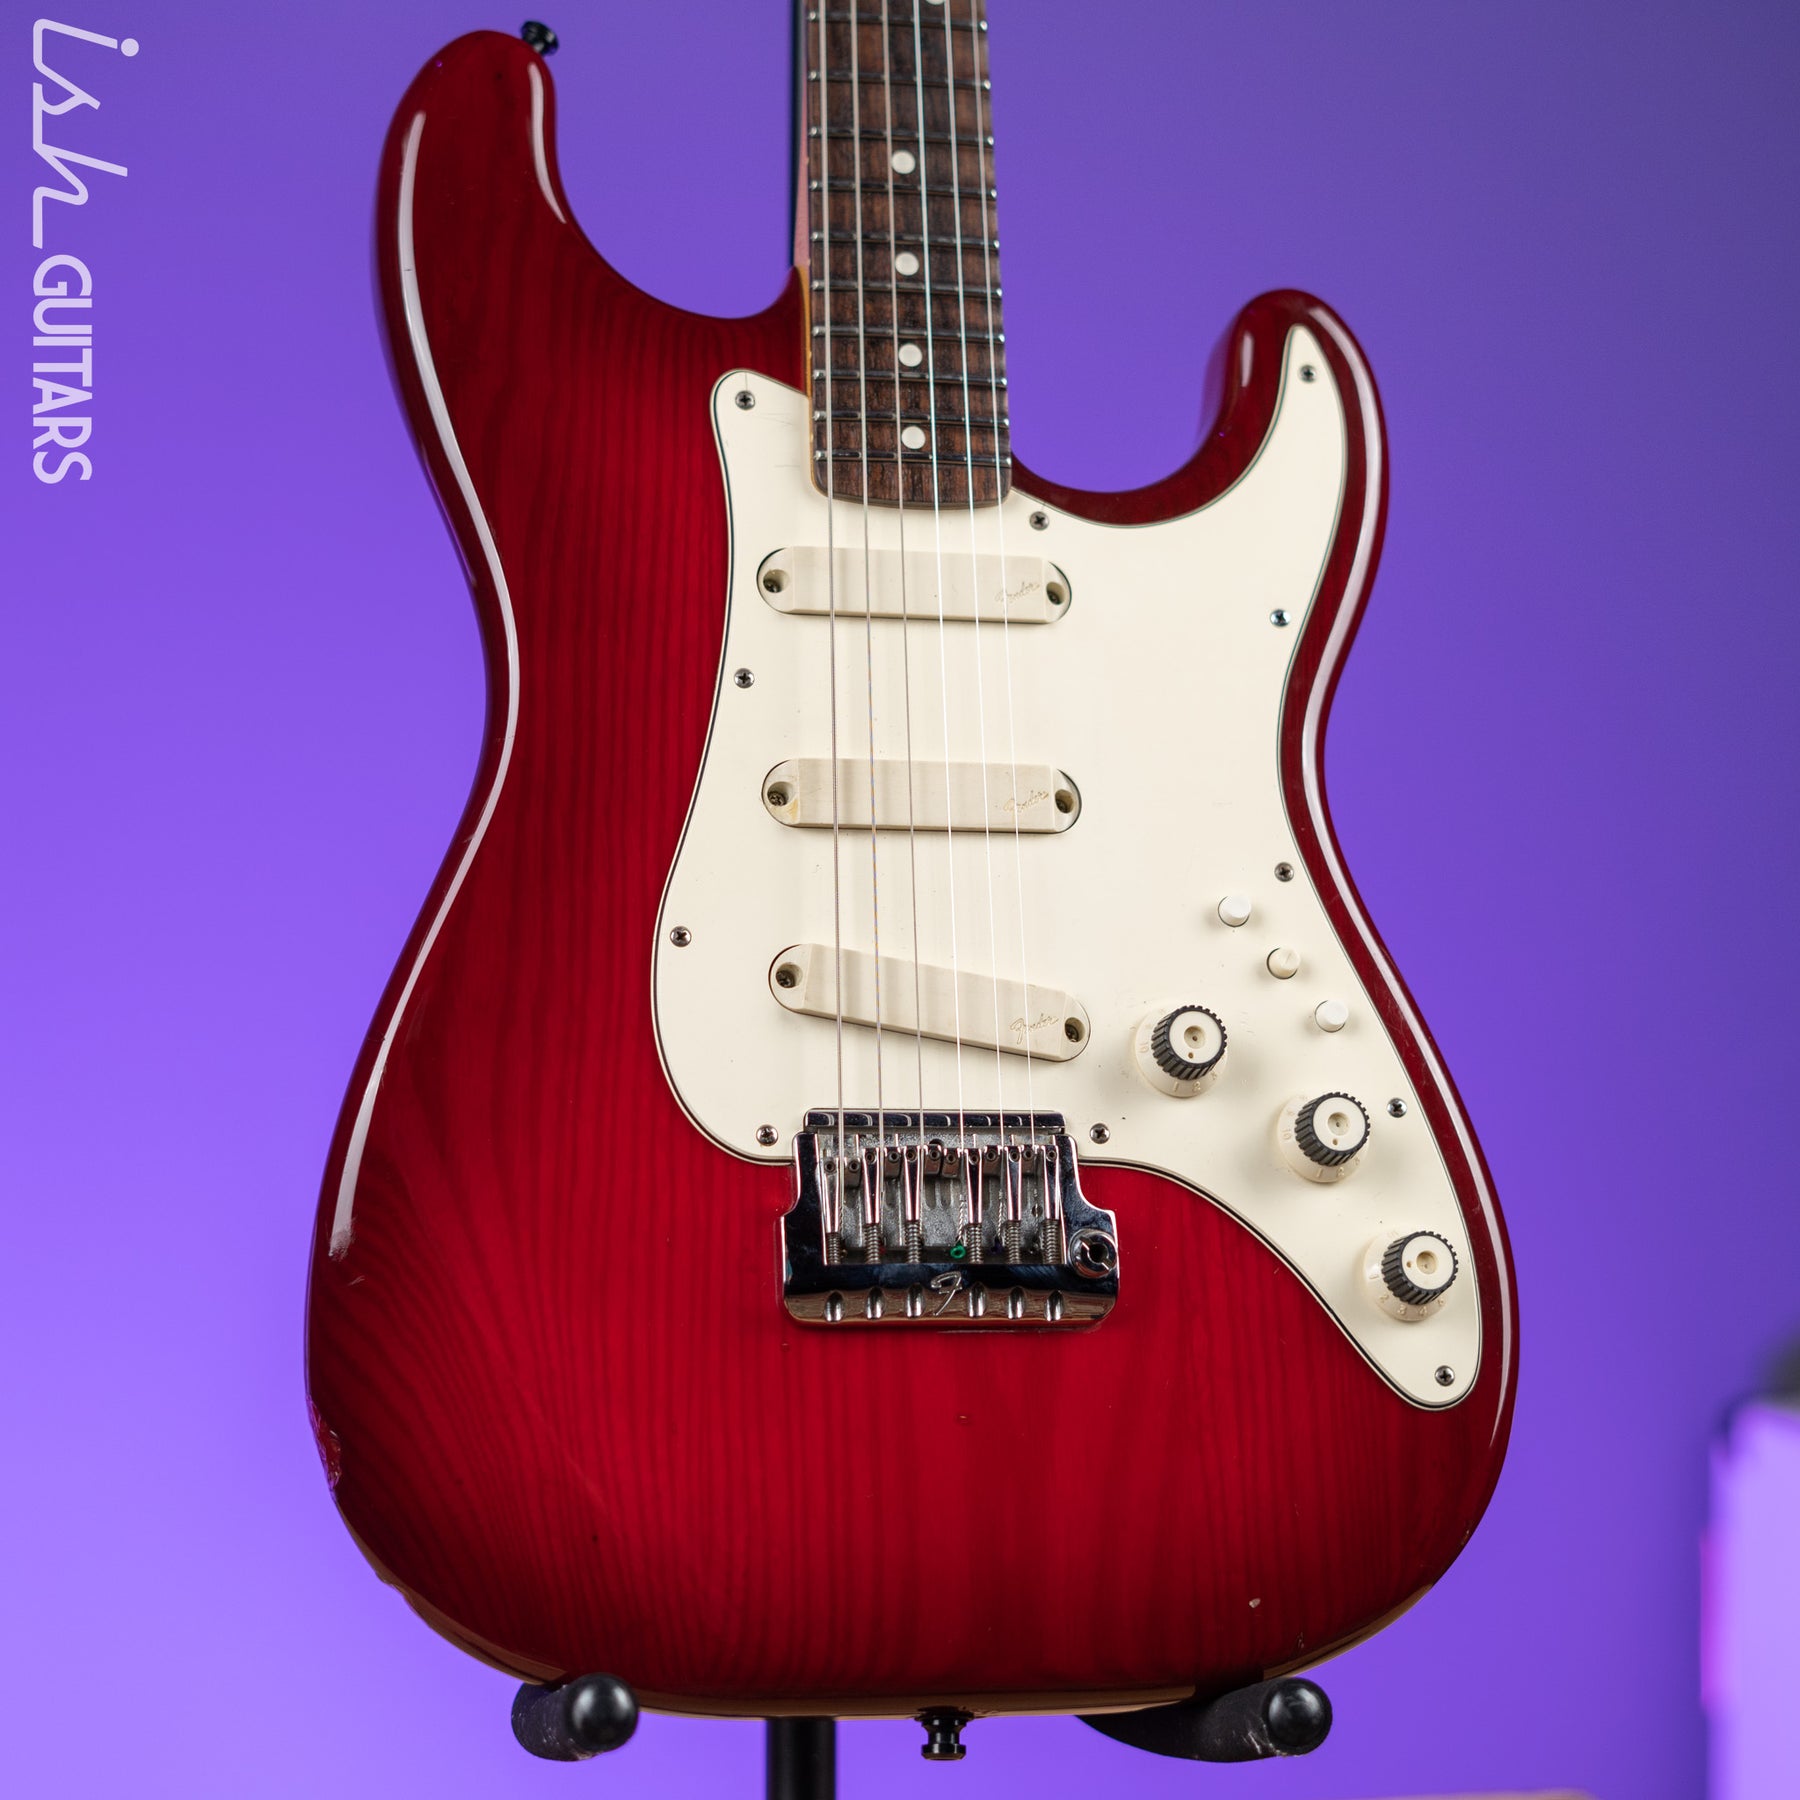 1983-1984 Fender Elite Stratocaster Fretboard Wild Cherr Ish Guitars